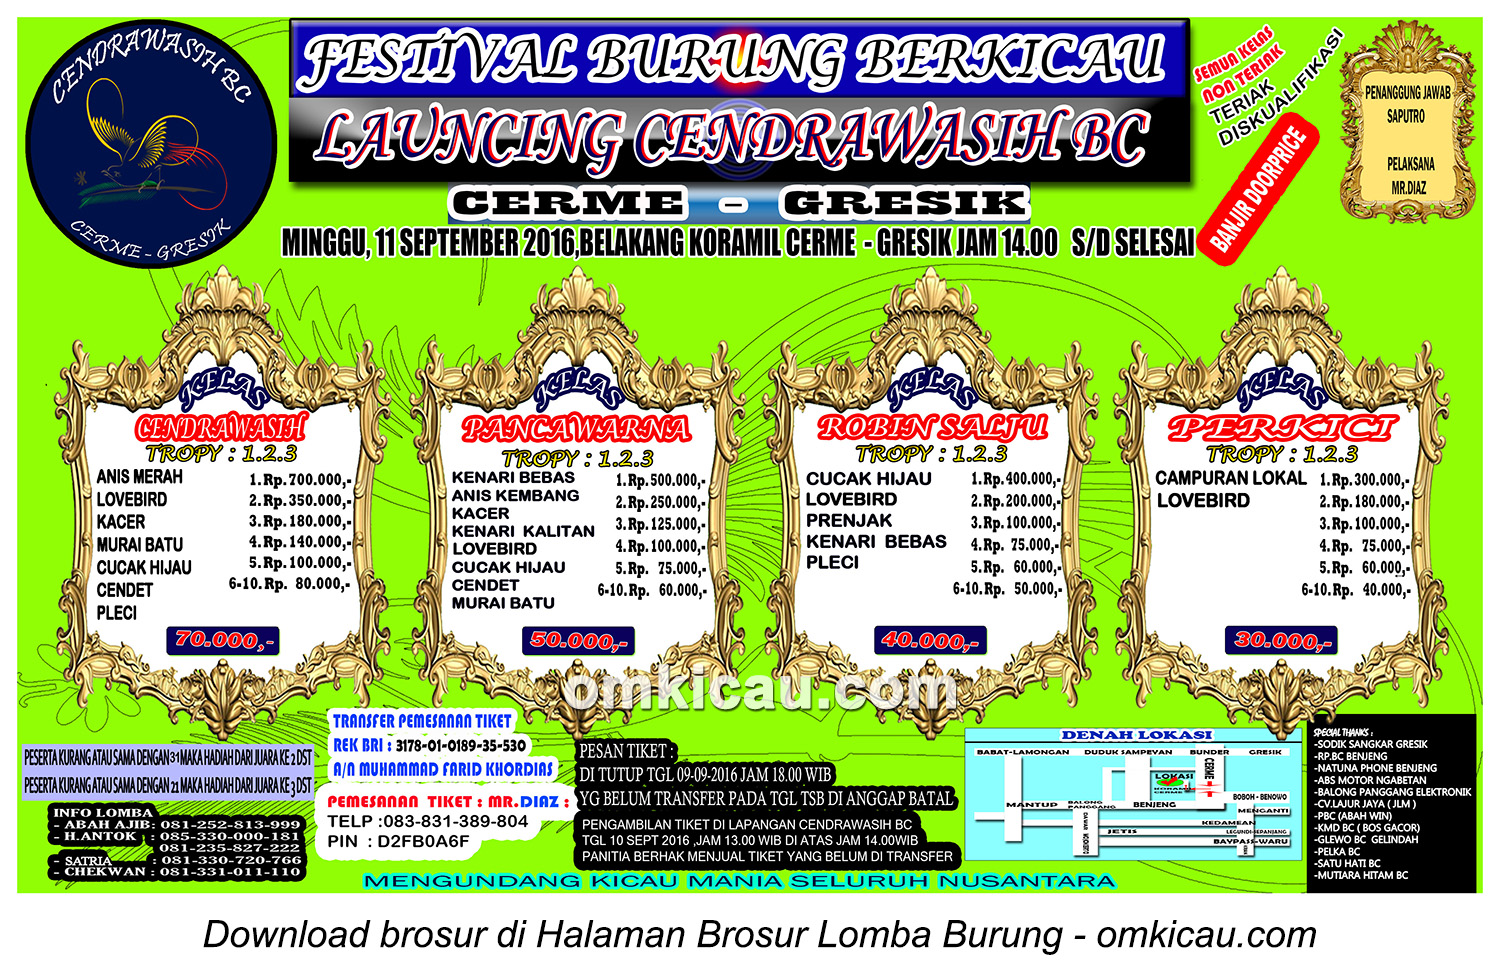 Brosur Lomba Burung Berkicau Launching Cendrawasih BC, Gresik, 11 September 2016